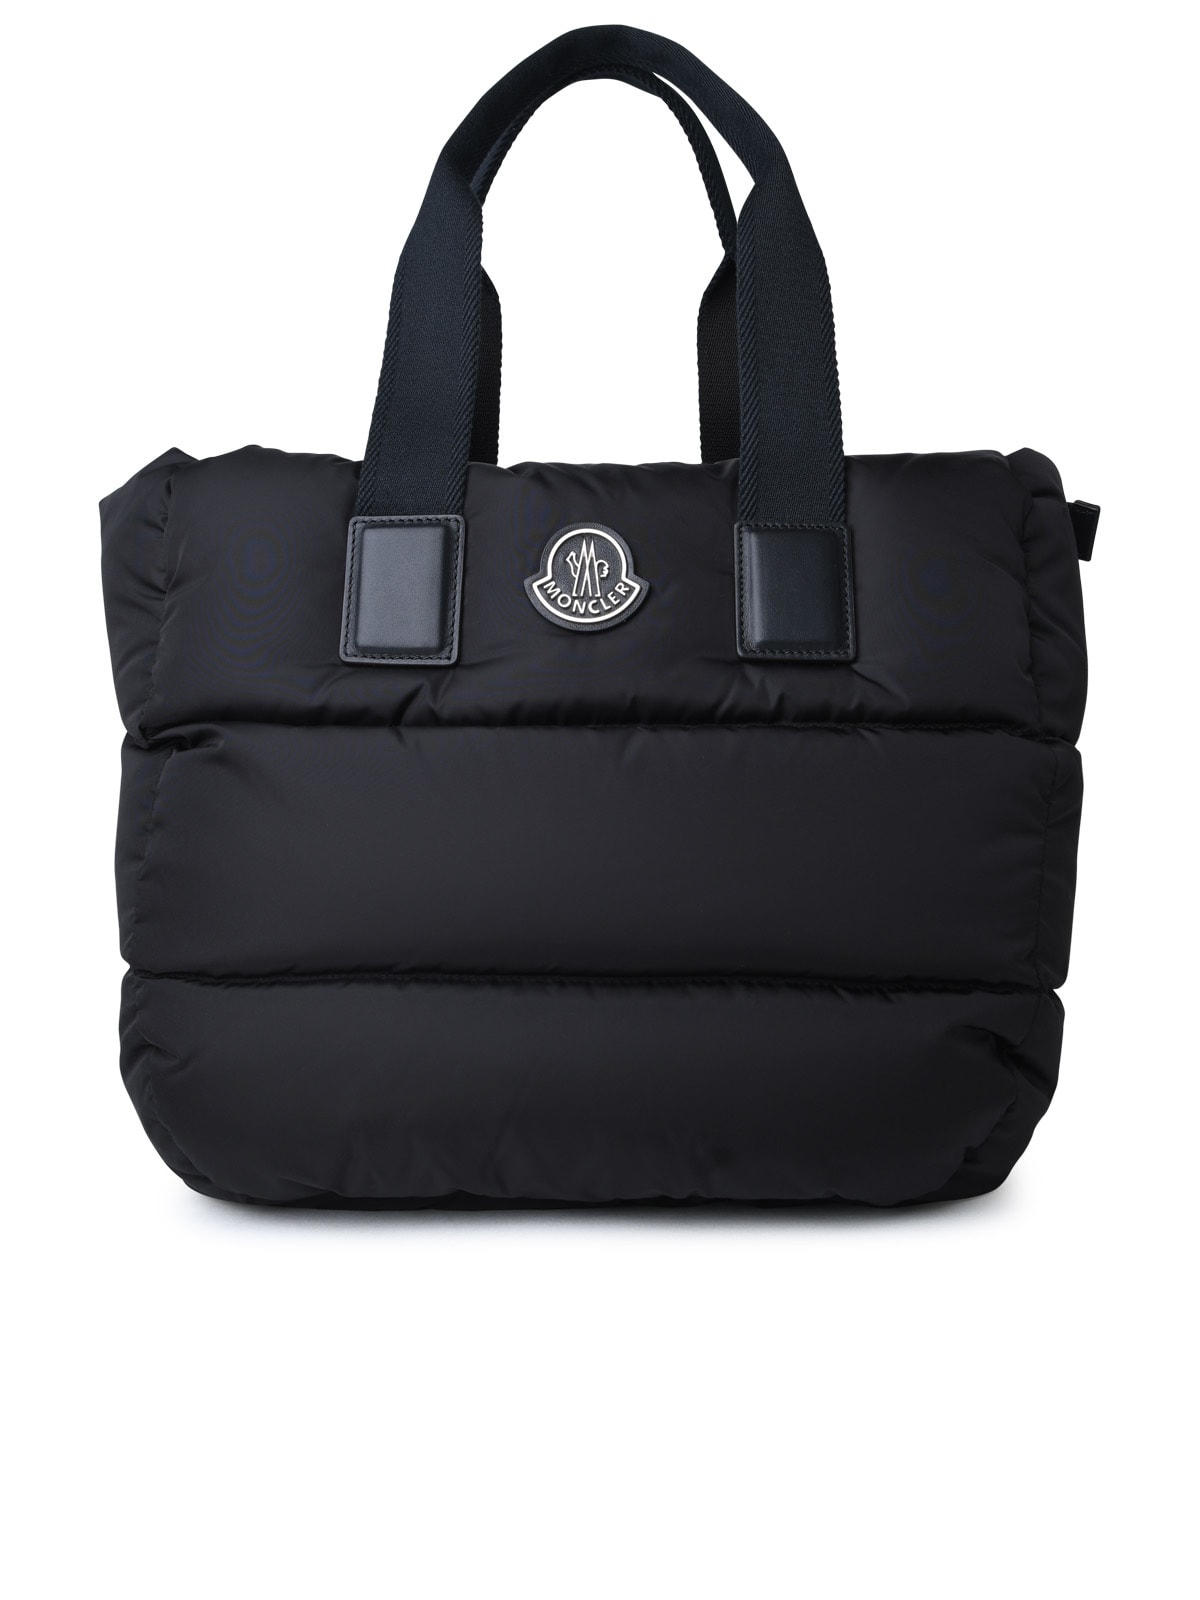 caradoc Black Nylon Bag